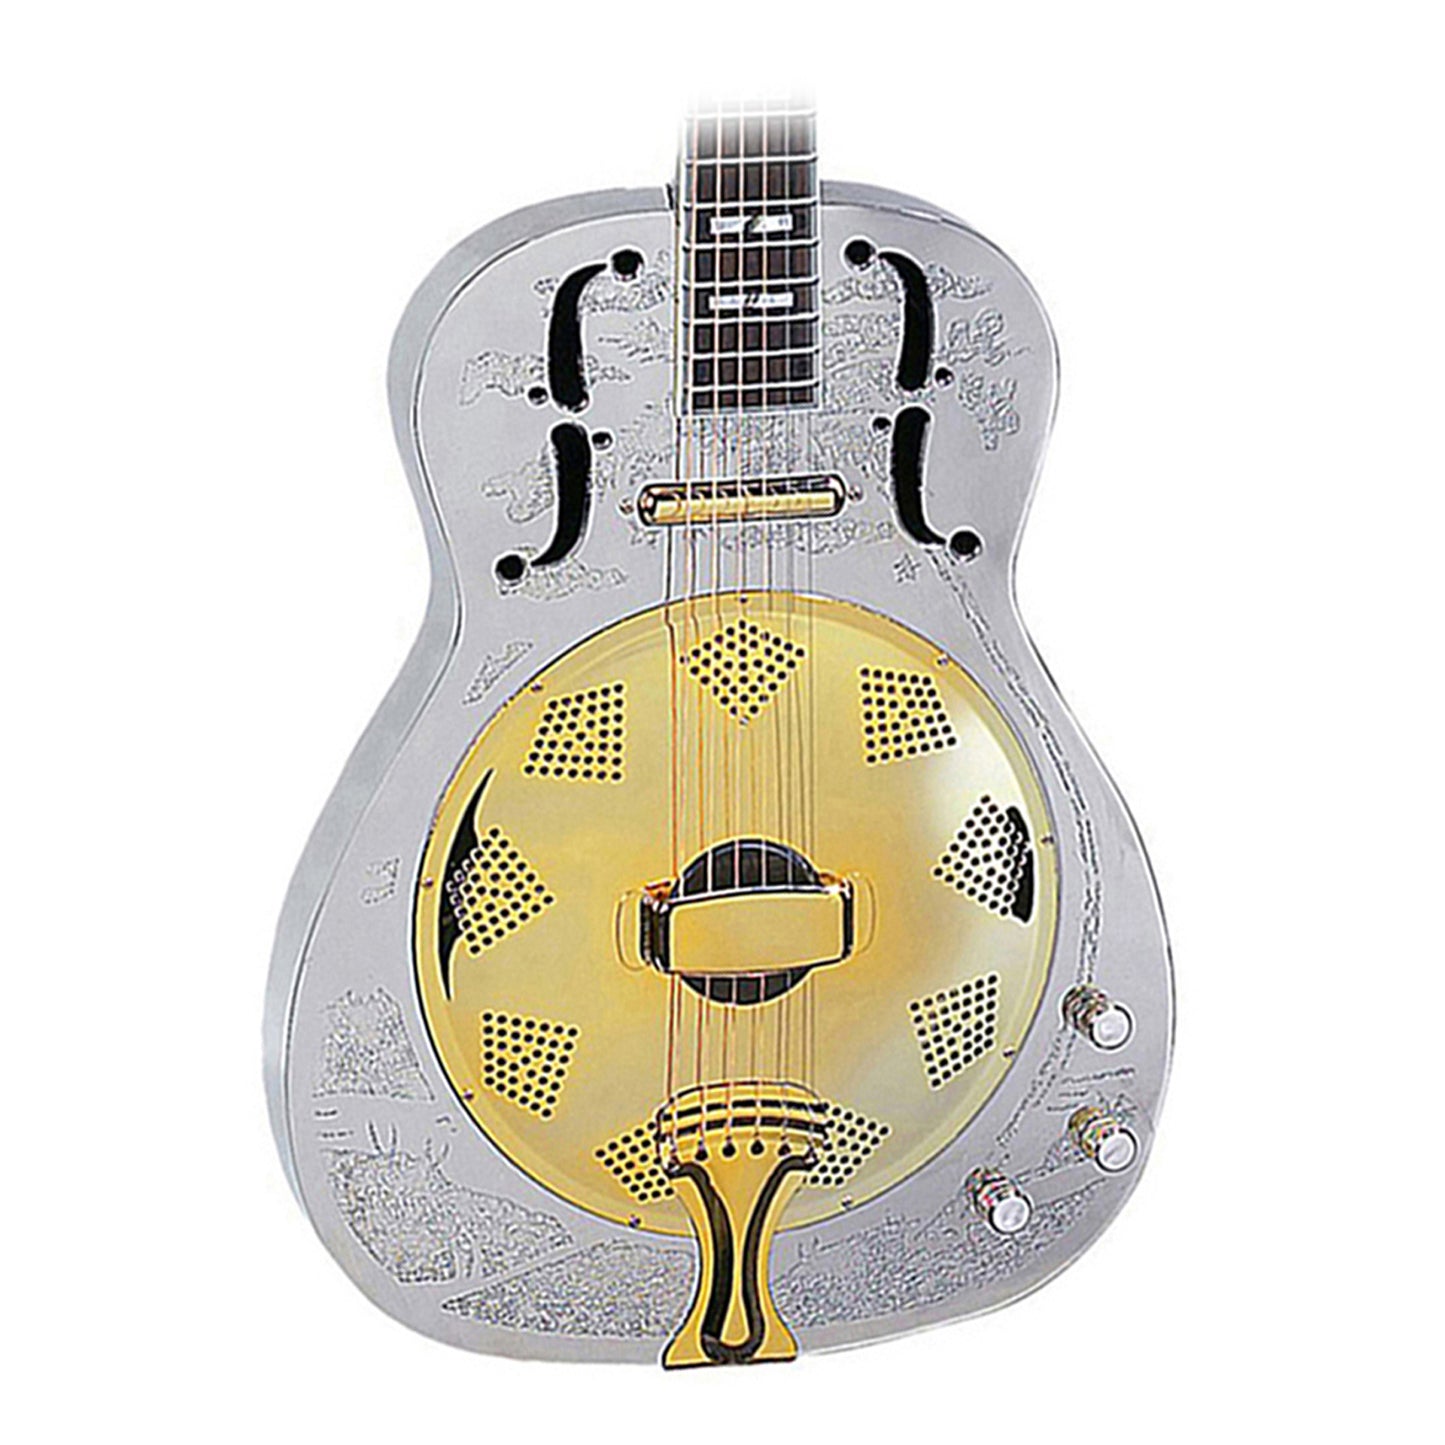 Dean Chrome G Acoustic/Elec Resonator Guitar in Chrome and Gold RESCG